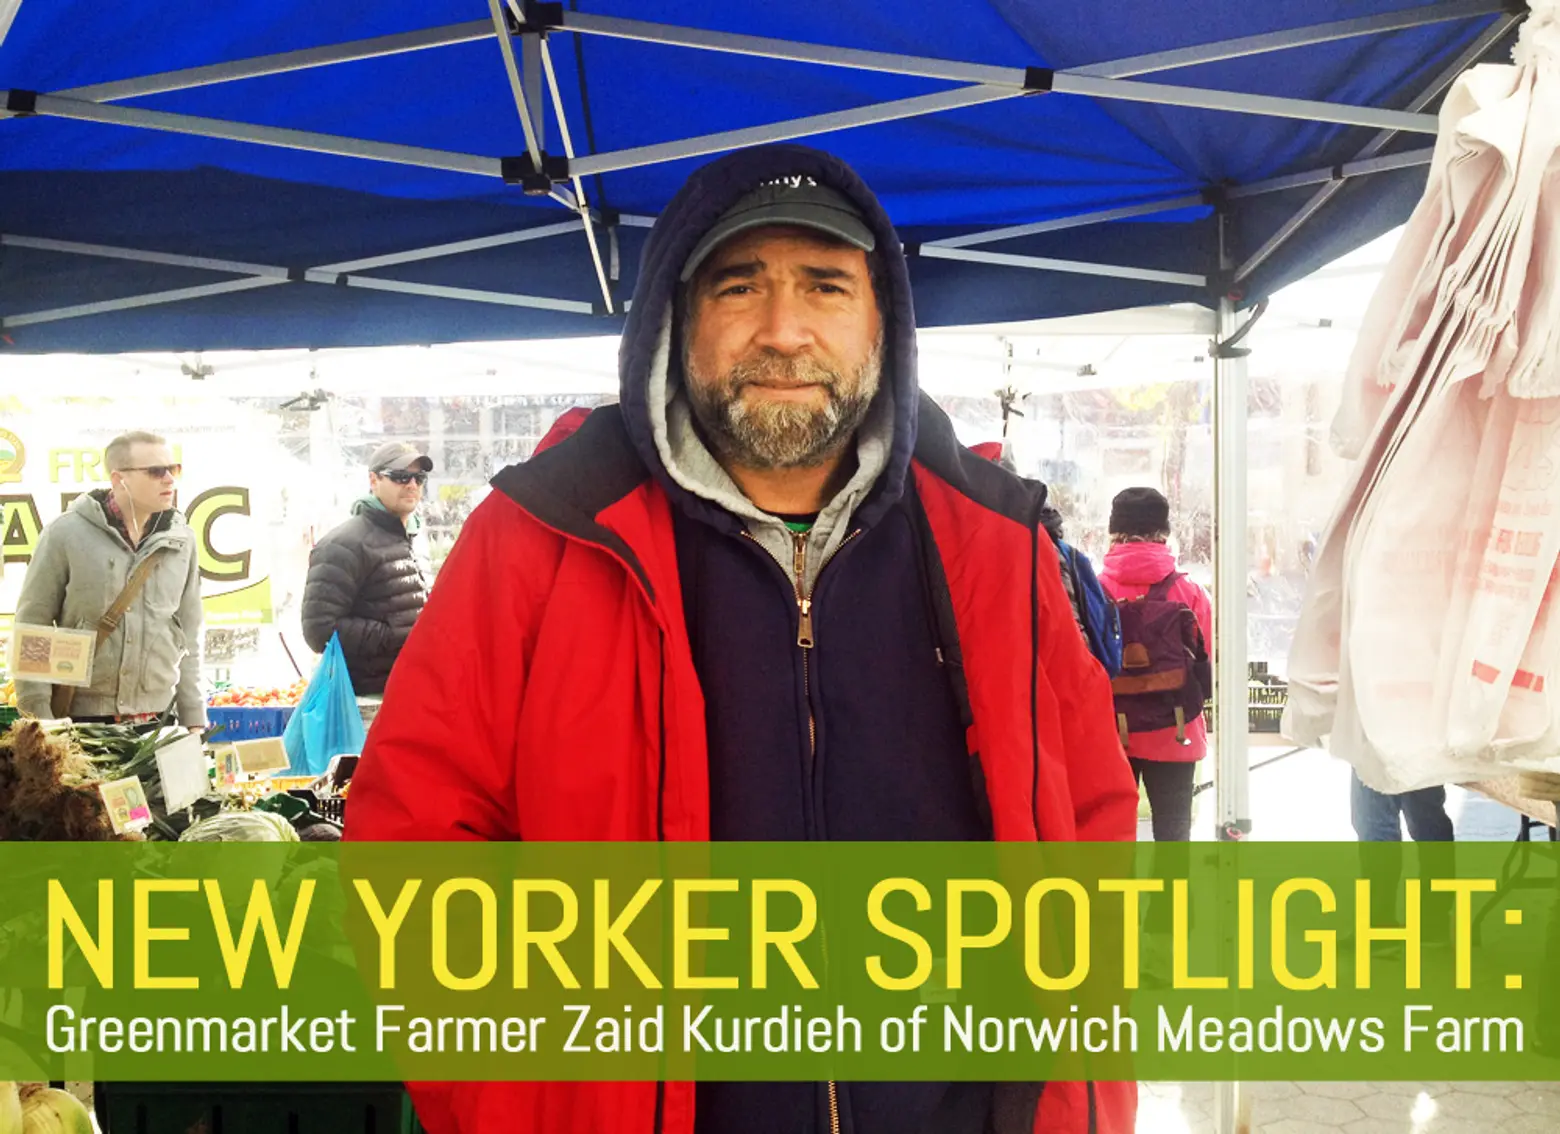 New Yorker Spotlight: It’s Turkey Time for NYC Greenmarket Farmer Zaid Kurdieh of Norwich Meadows Farm